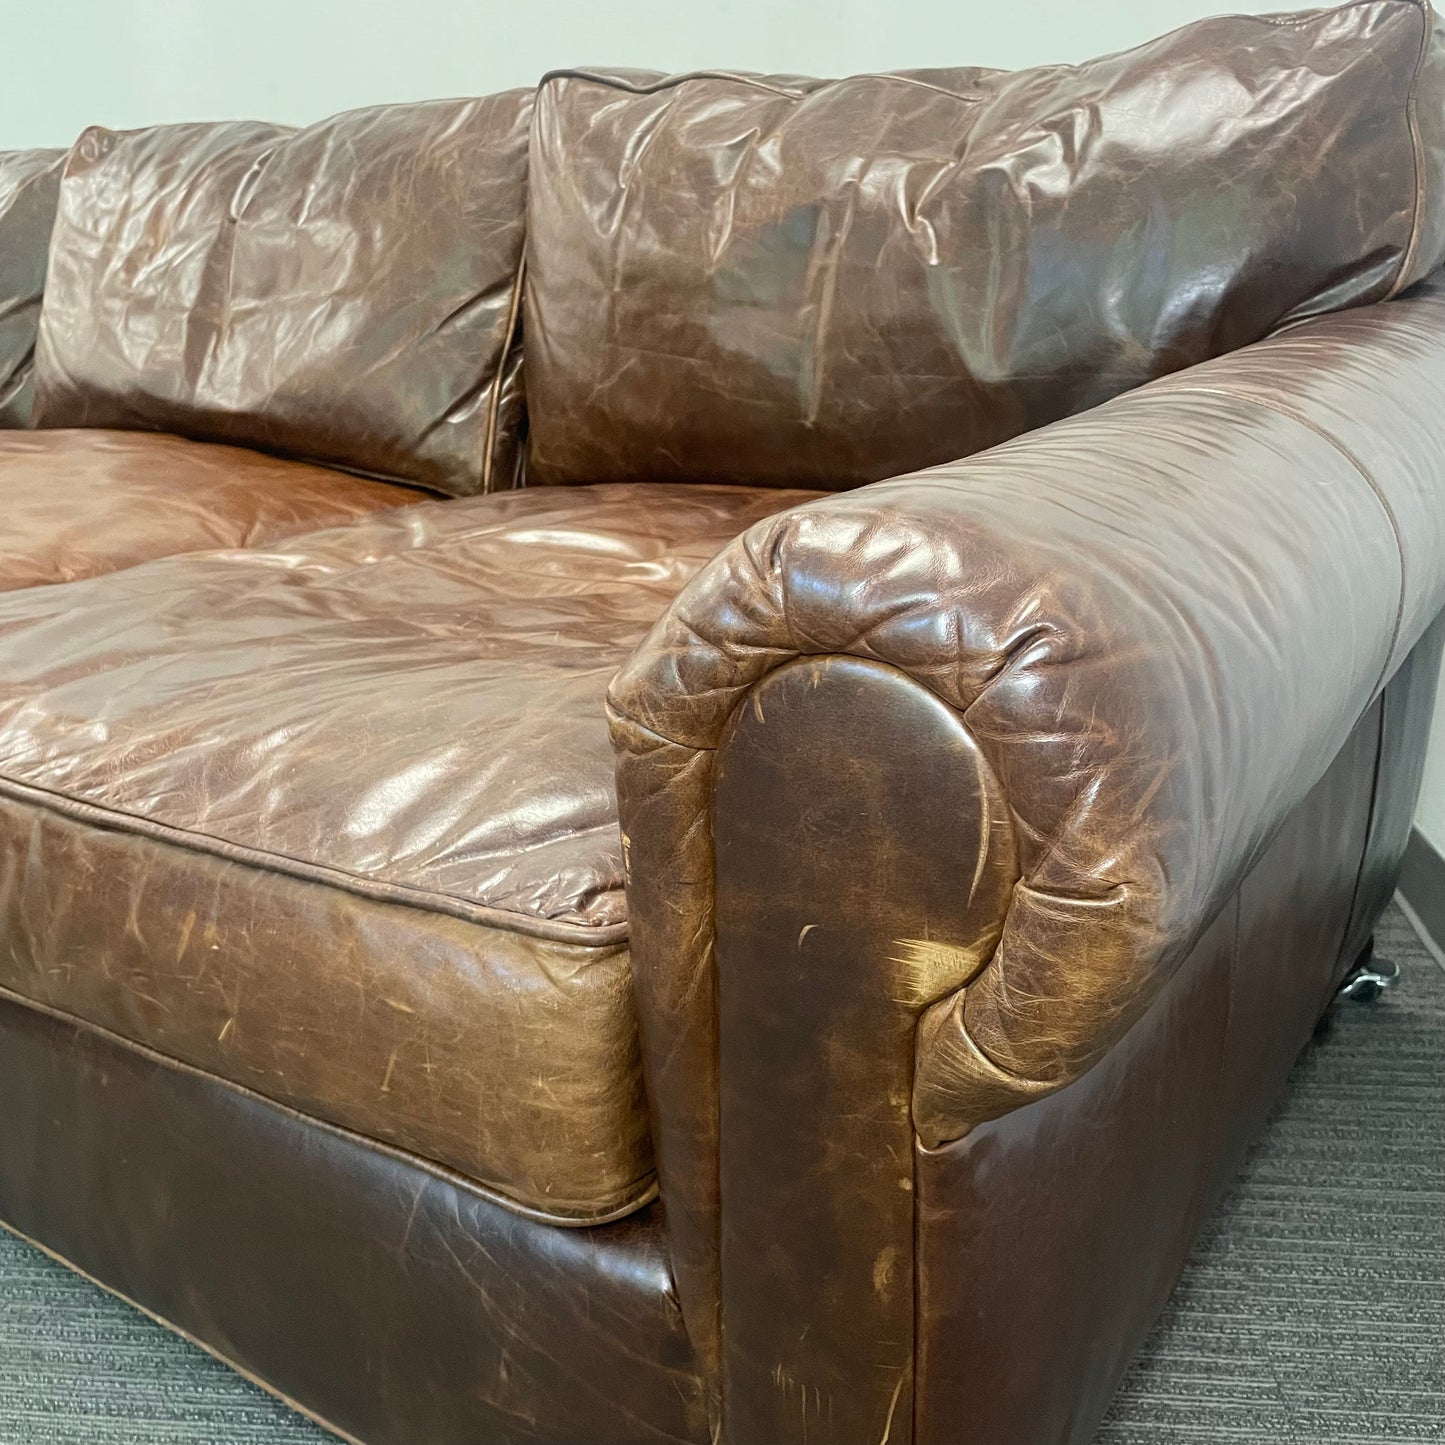 Restoration Hardware Leather Sofa